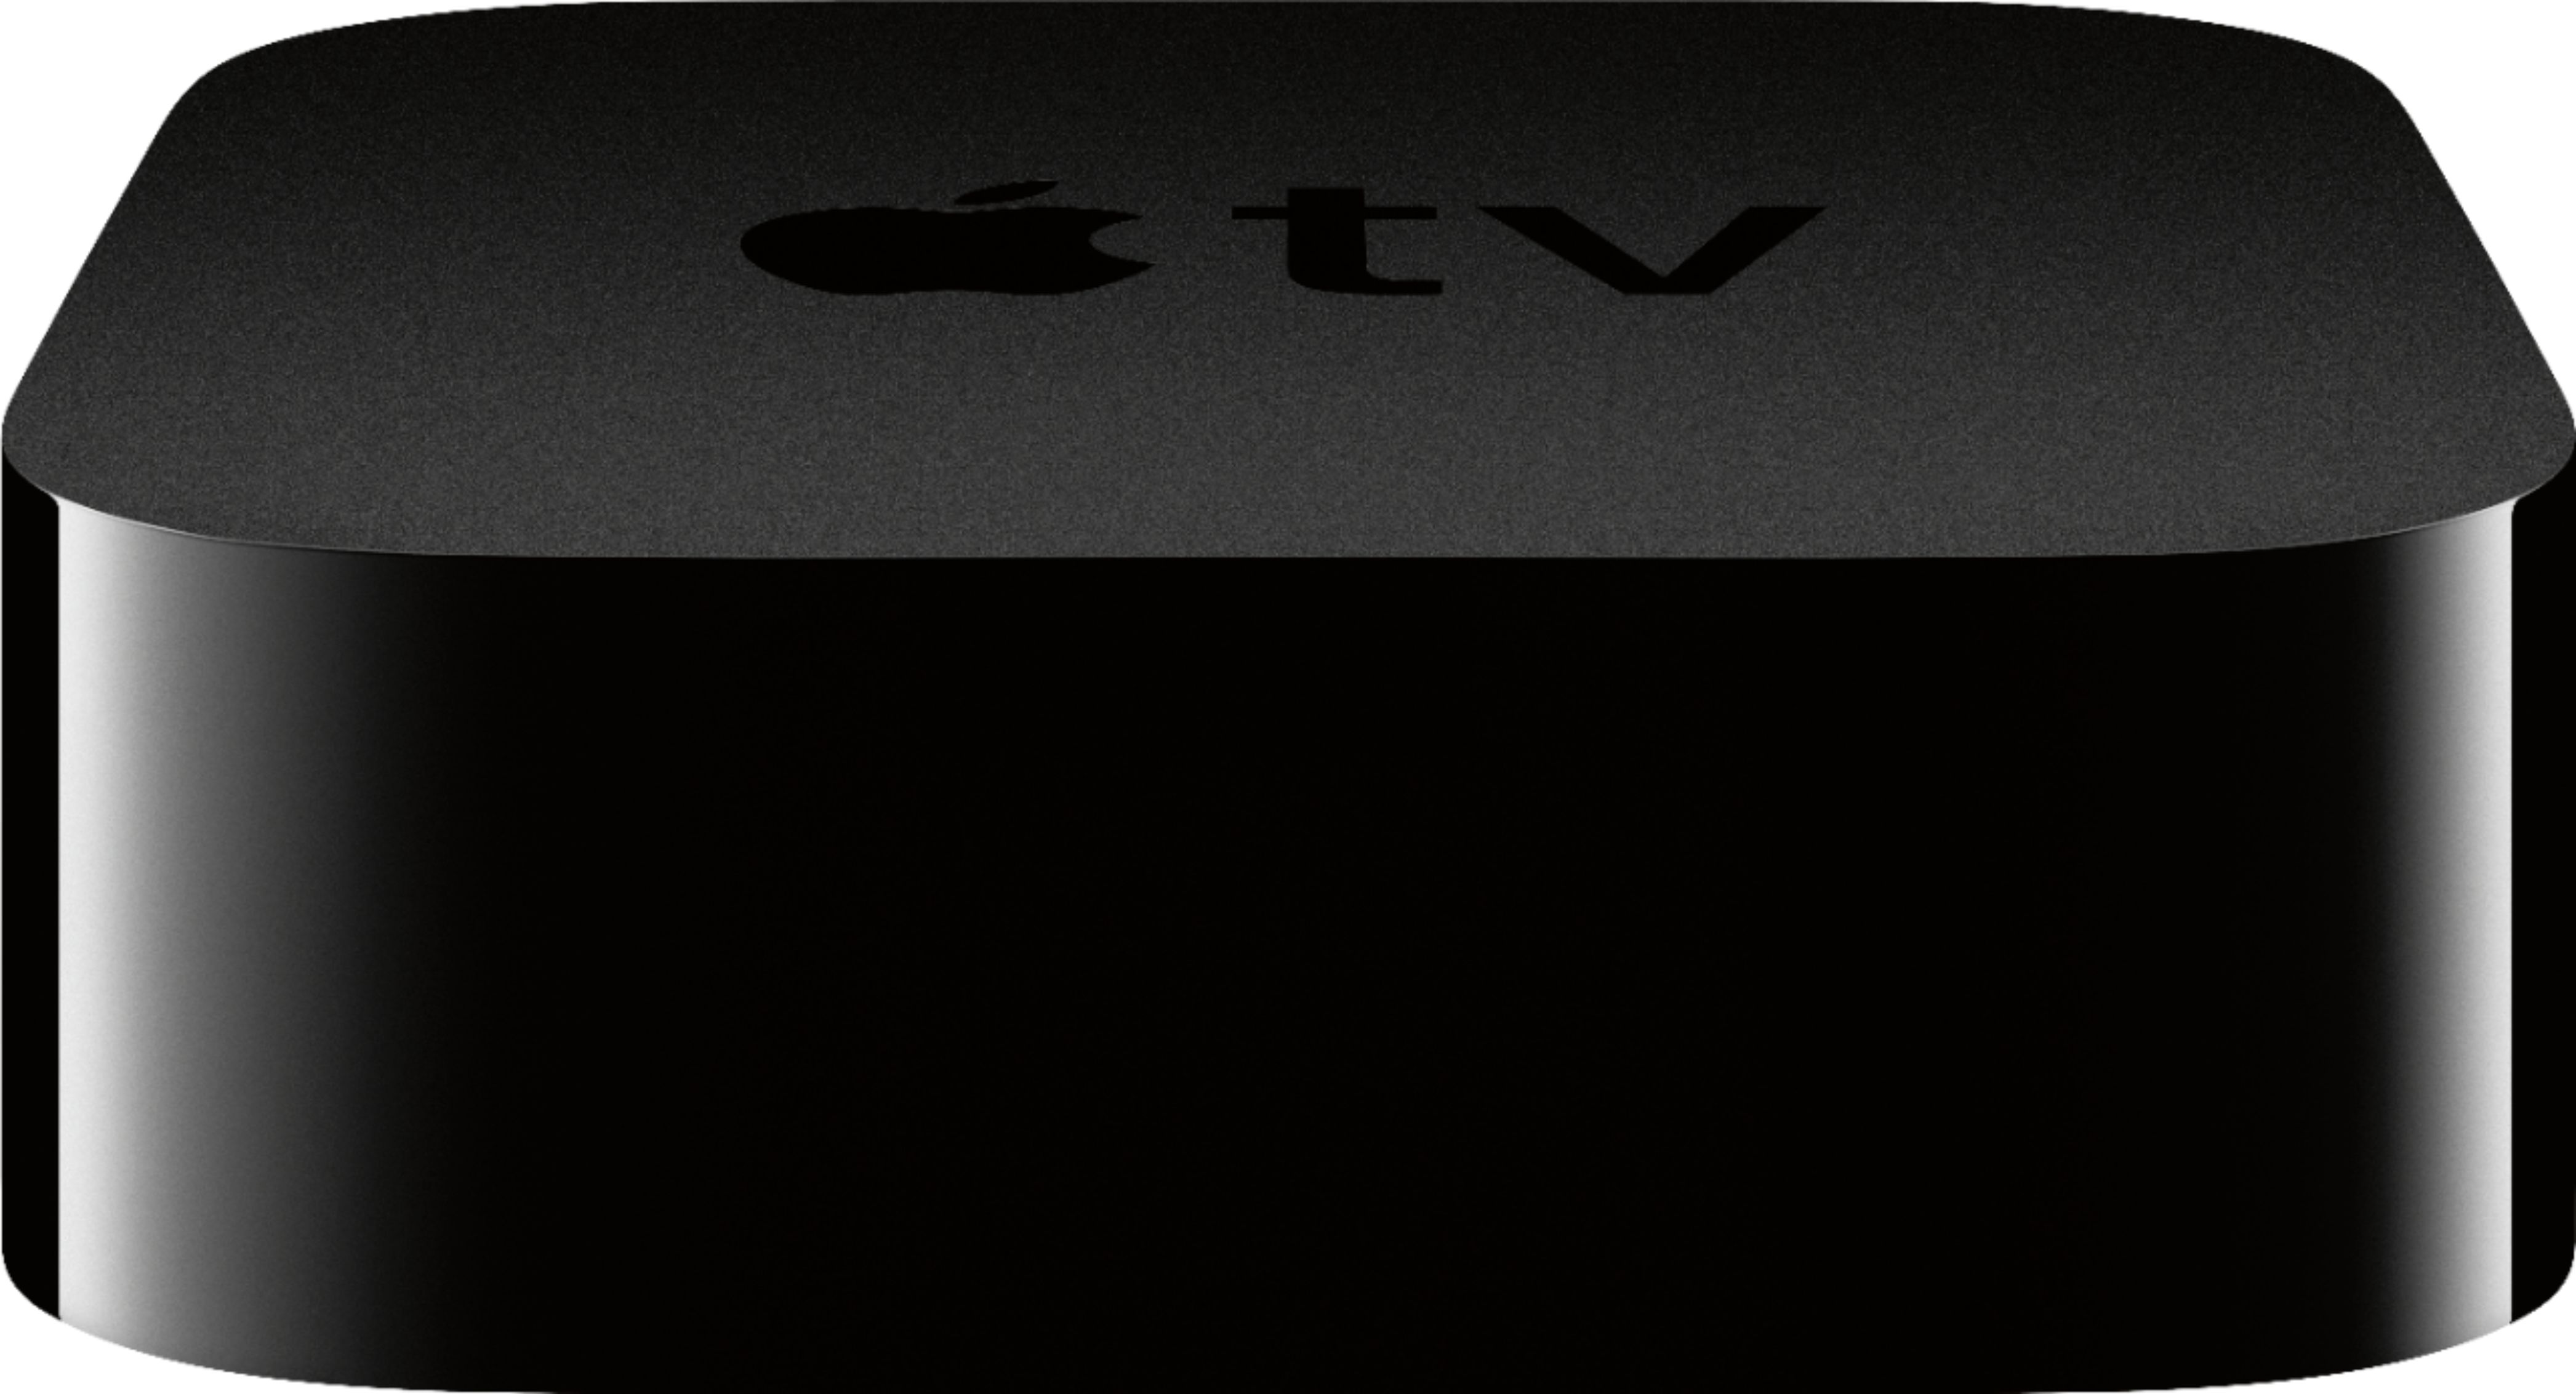 PC/タブレット PC周辺機器 Best Buy: Apple TV HD 32GB Black MR912LL/A